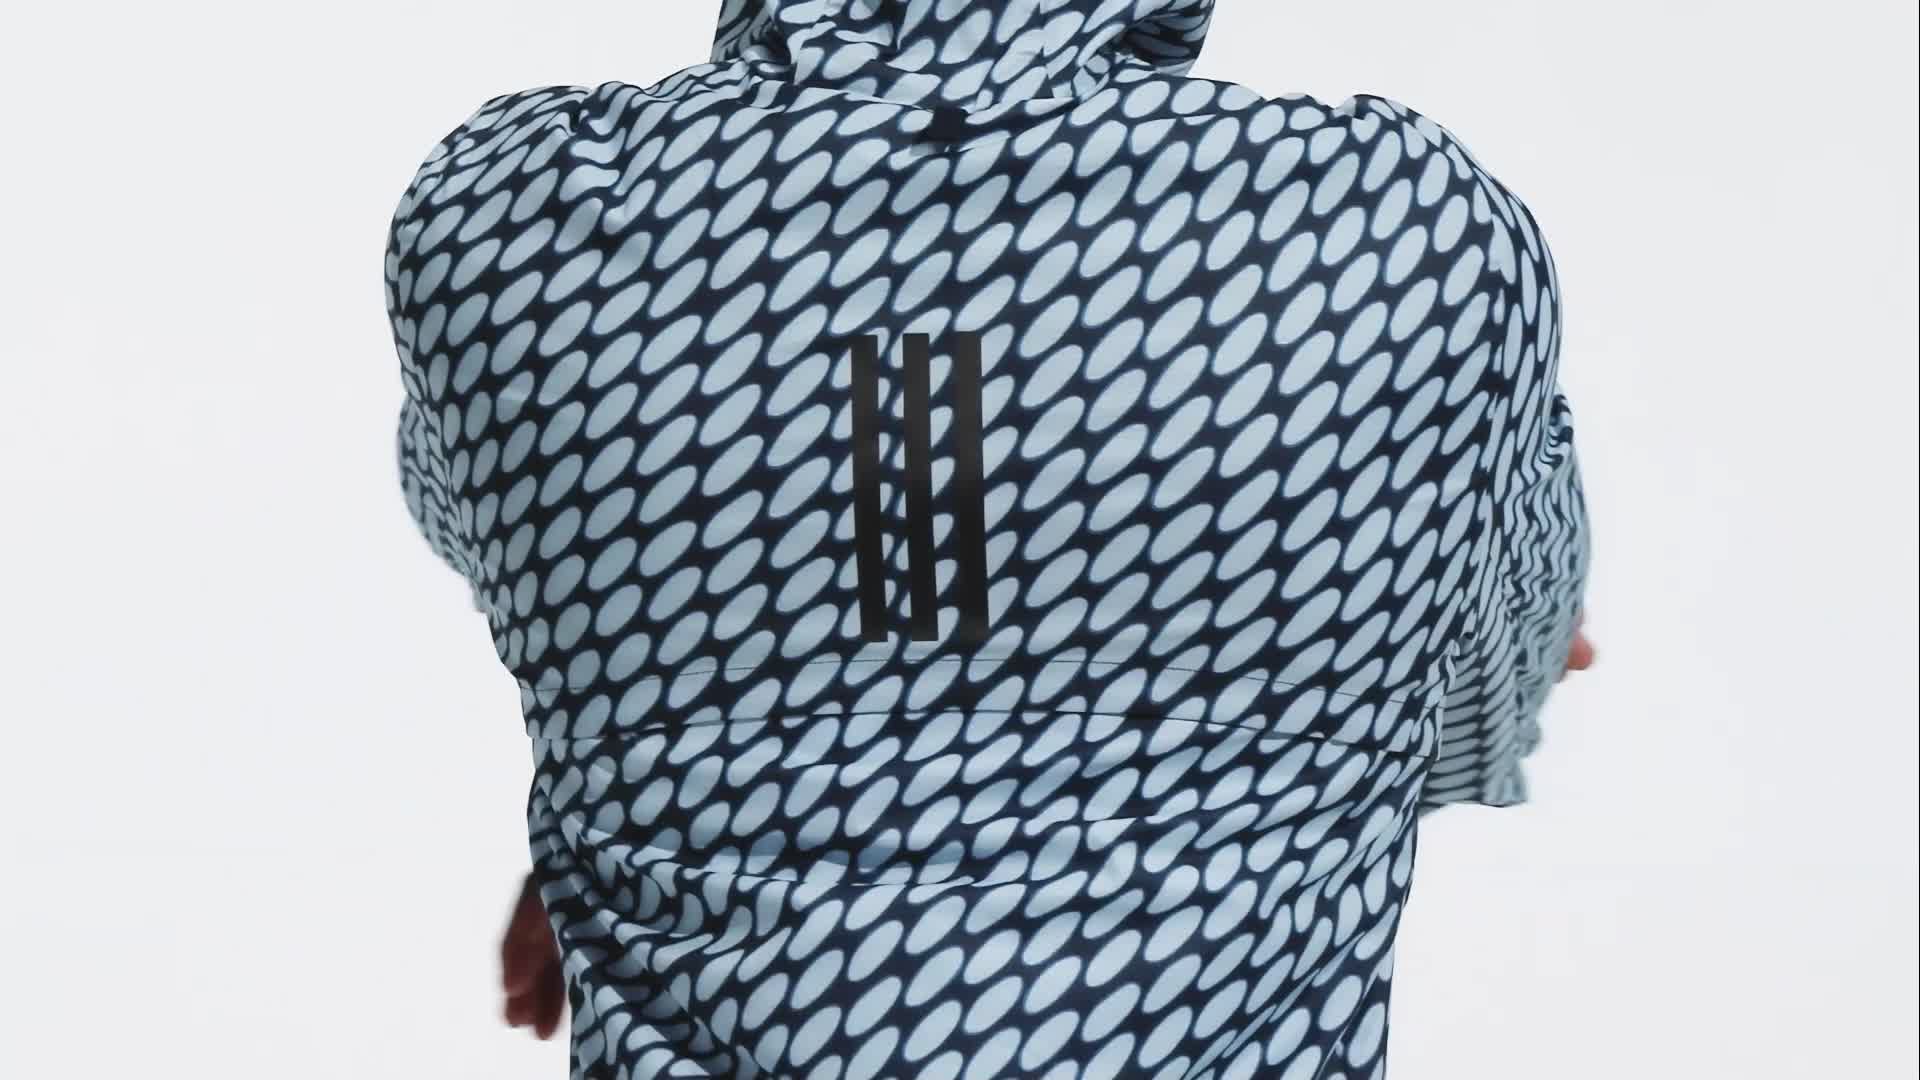 Adidas x Marimekko Colorblock Pattern Jacket - White Jackets, Clothing -  WAXMM20262